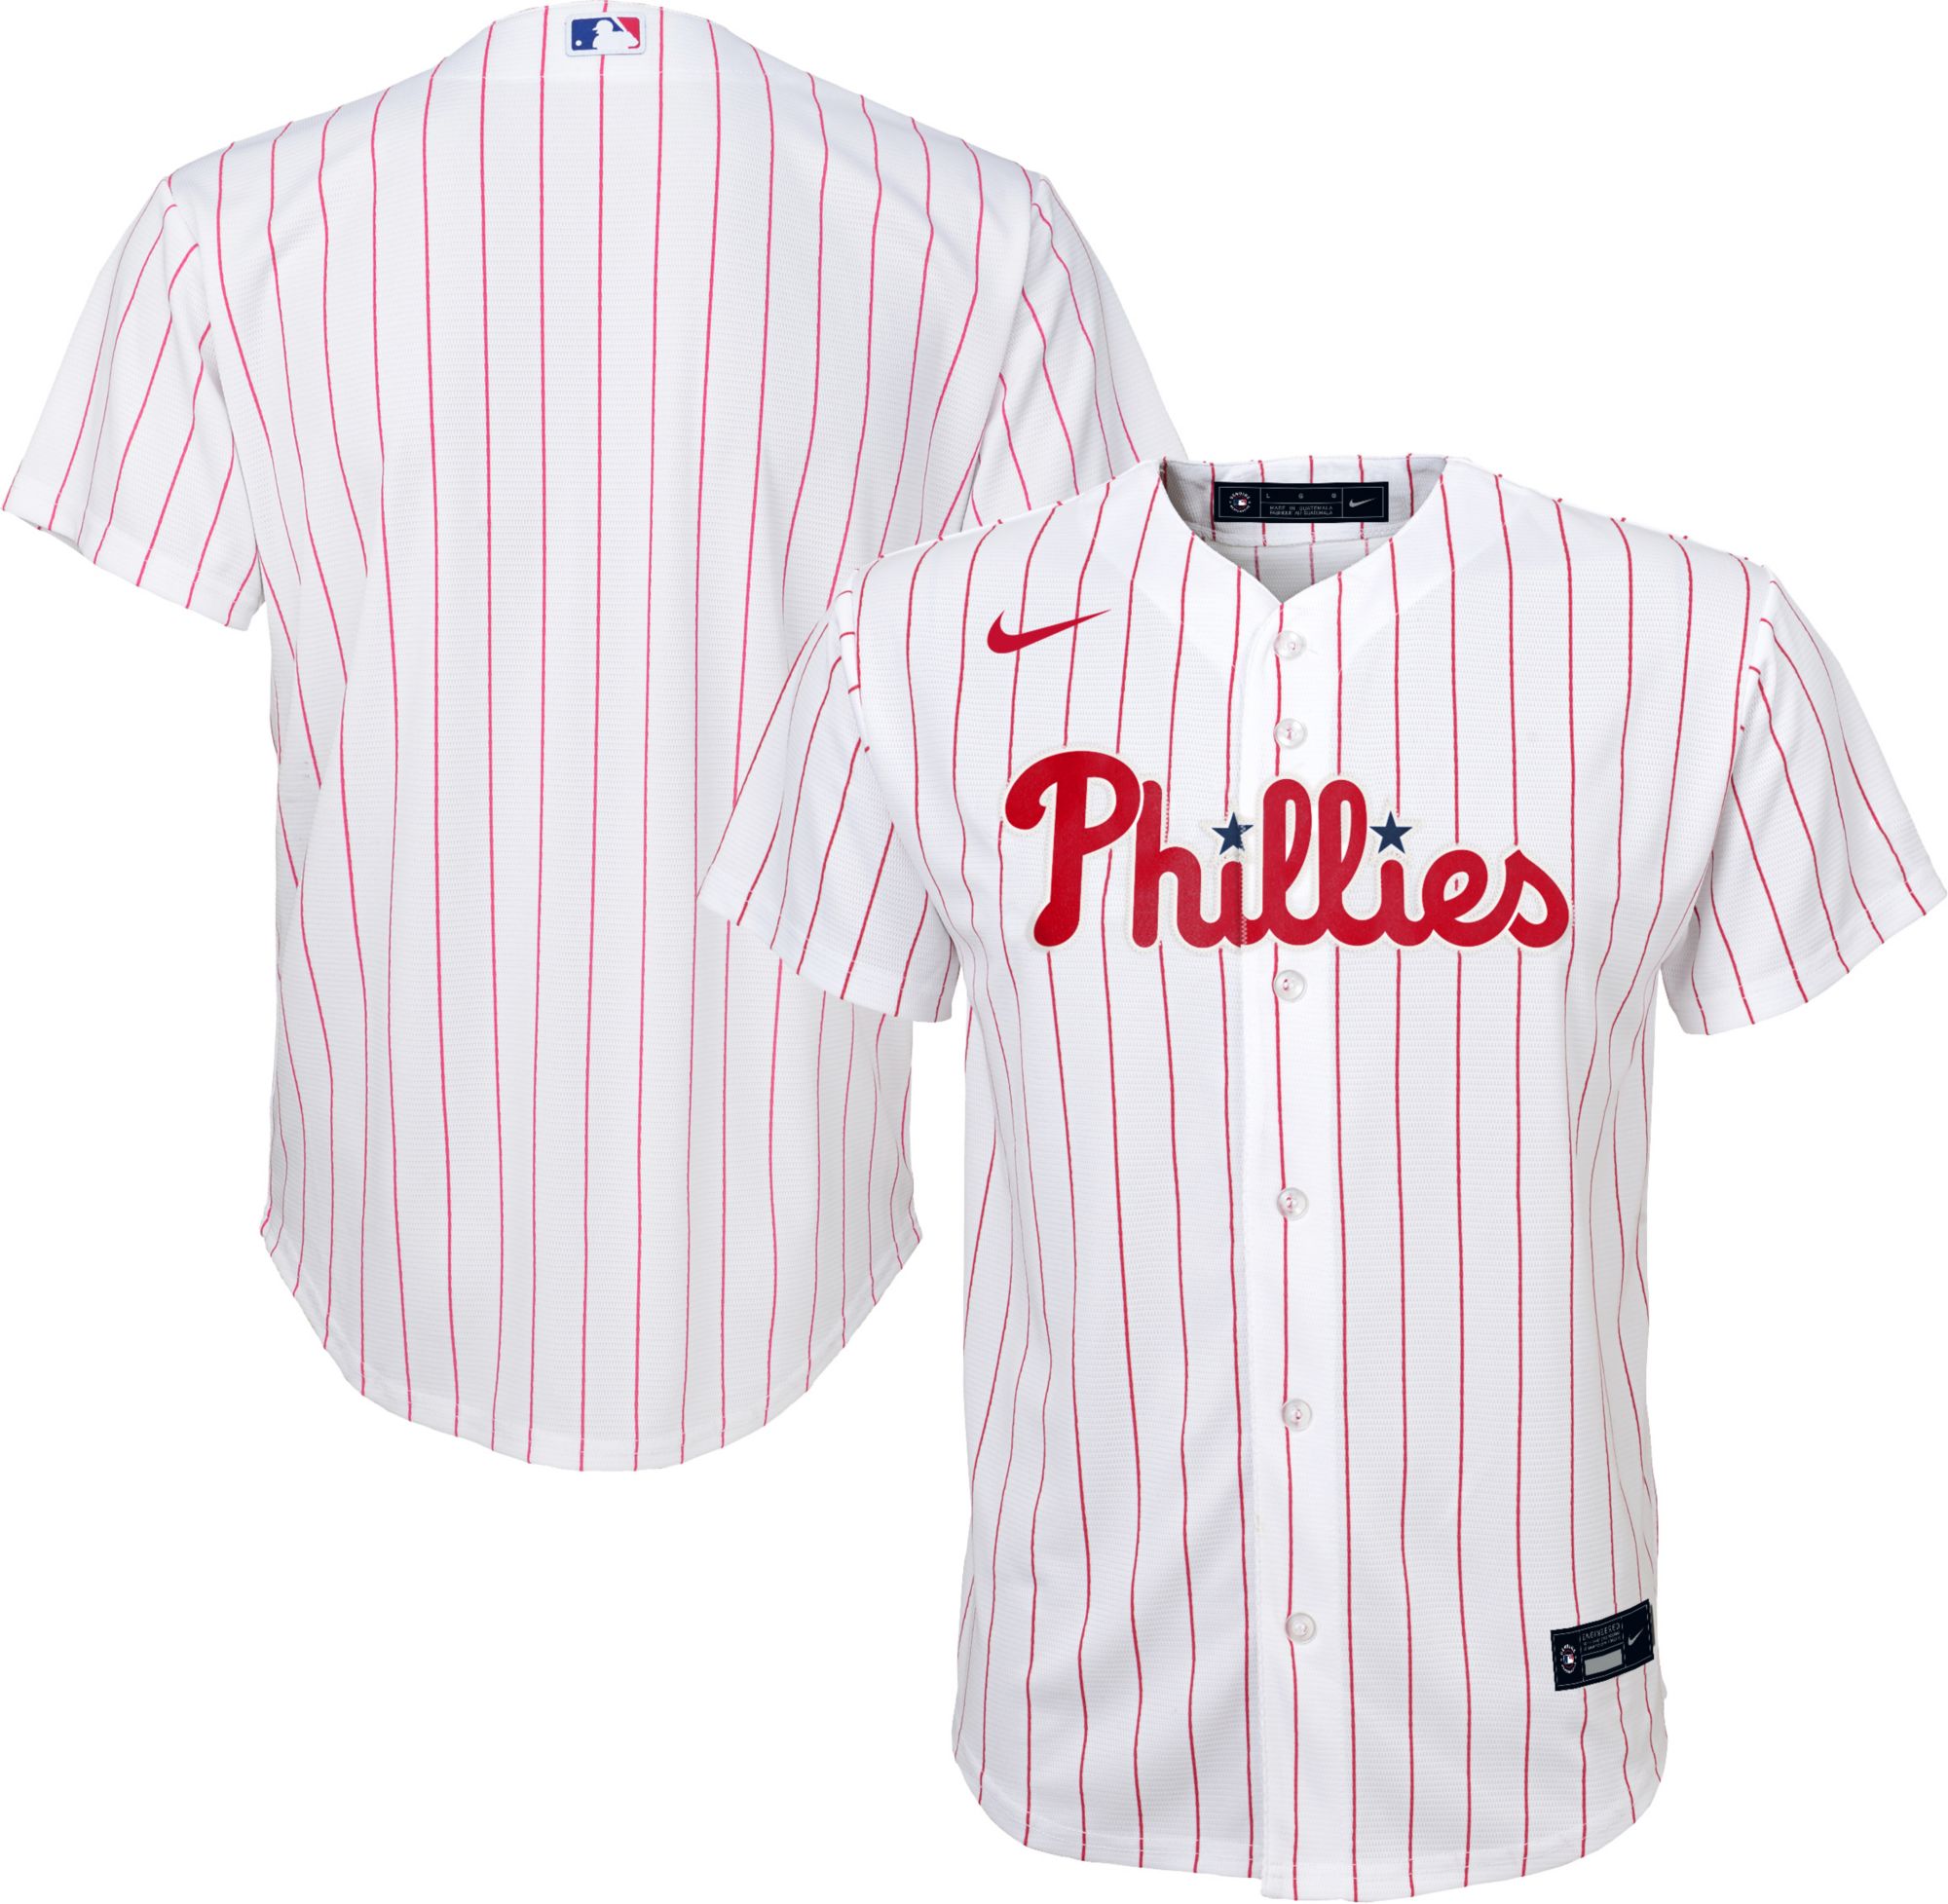 Philadelphia baseball gear